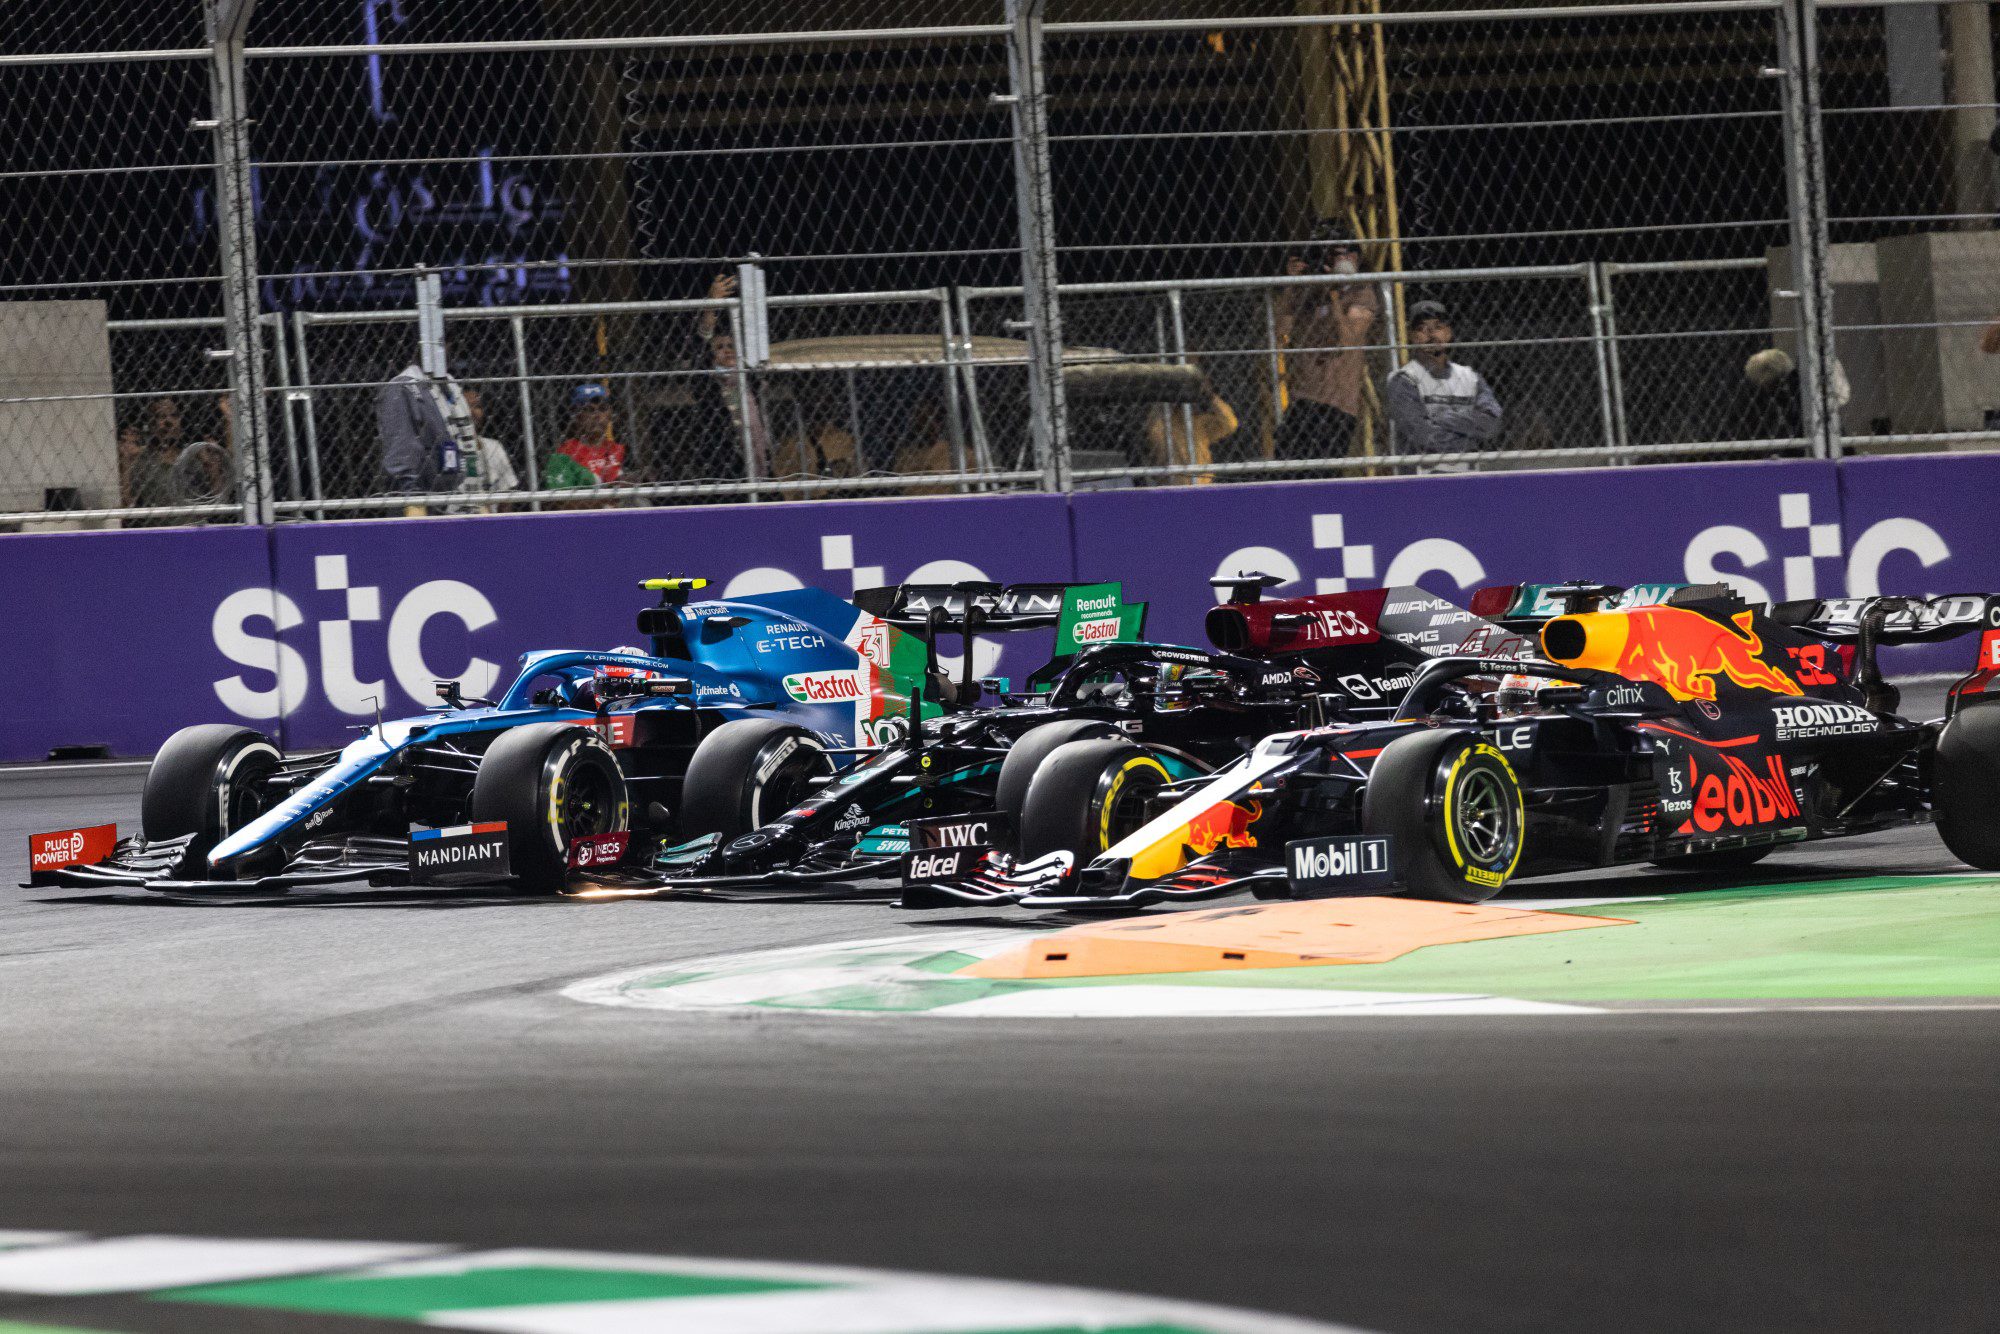 Lewis Hamilton, Max Verstappen e Esteban Ocon, GP da Arábia Saudita, Jeddah, F1 2021